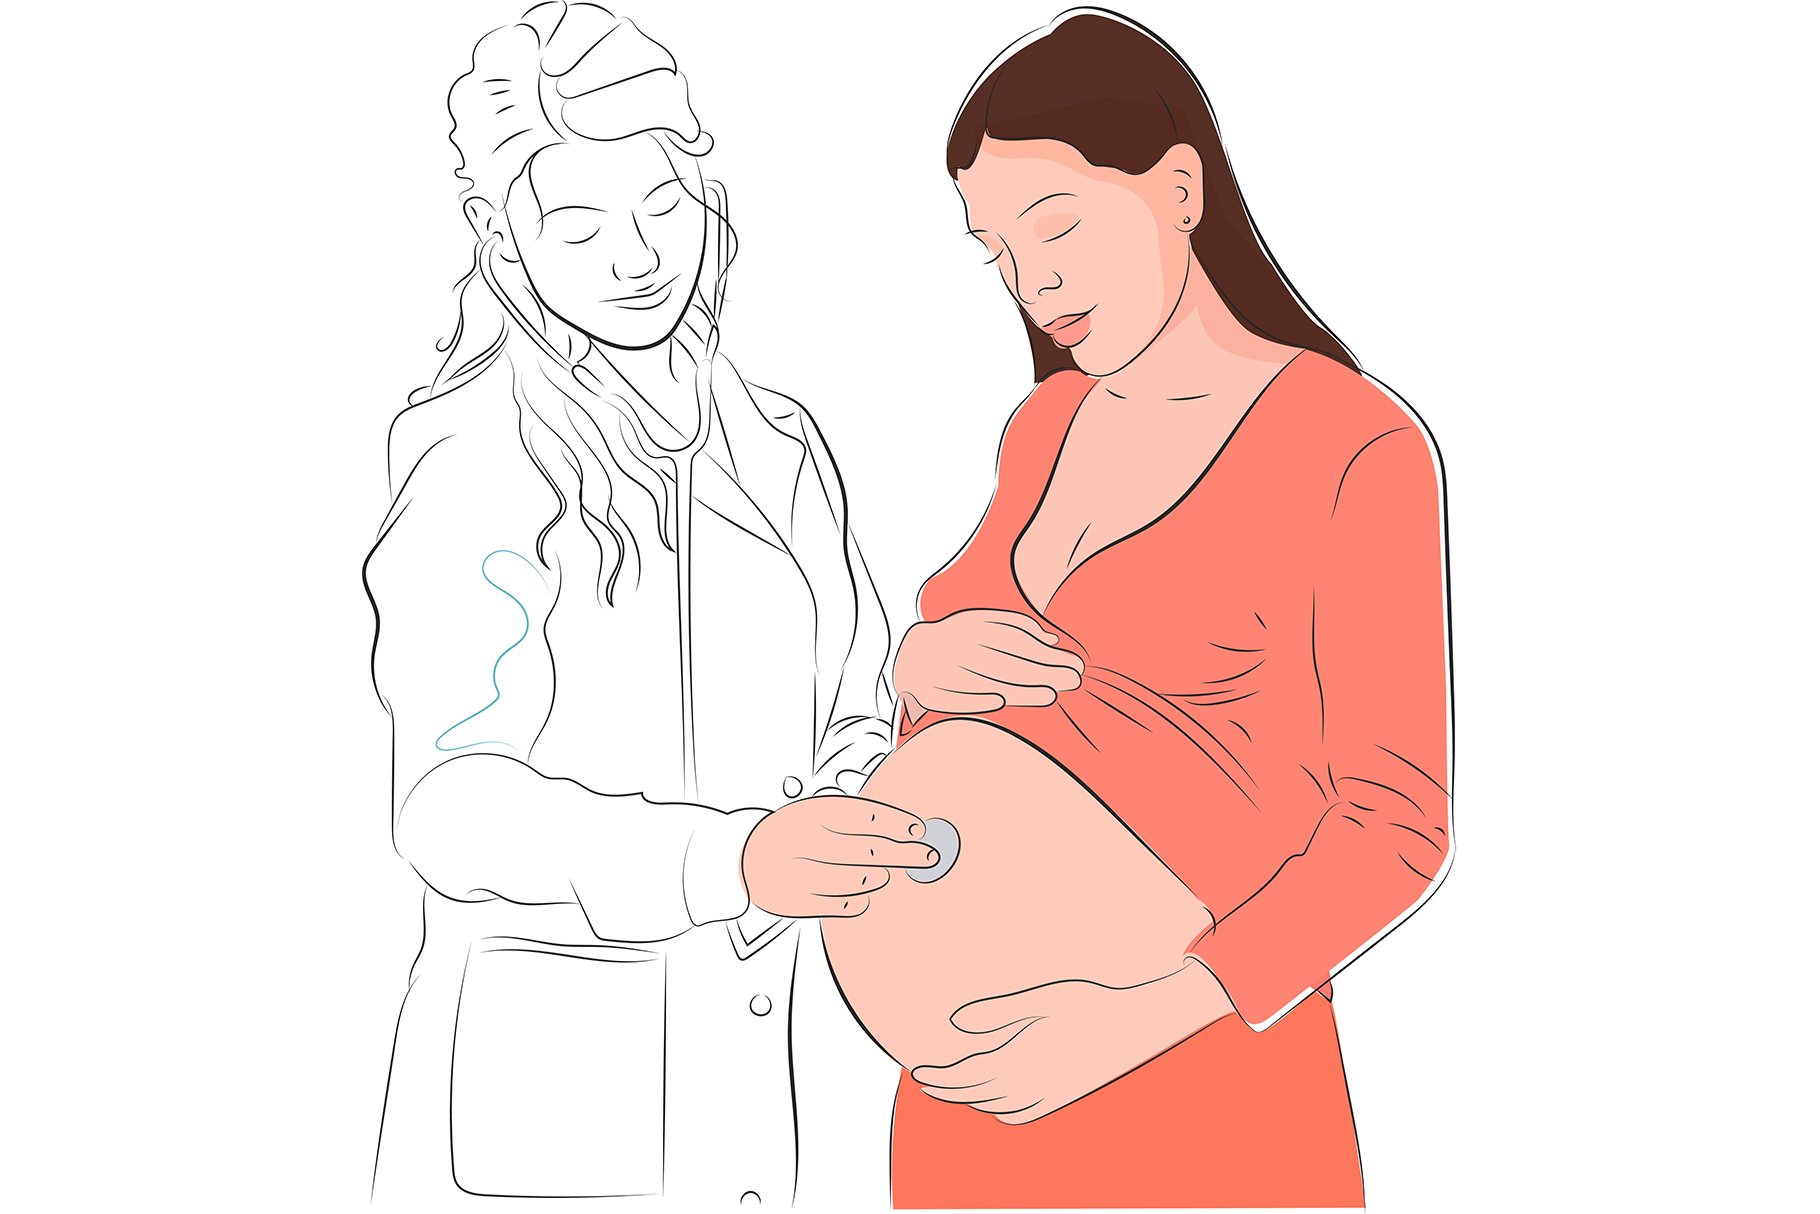 Pregnancy cover image.